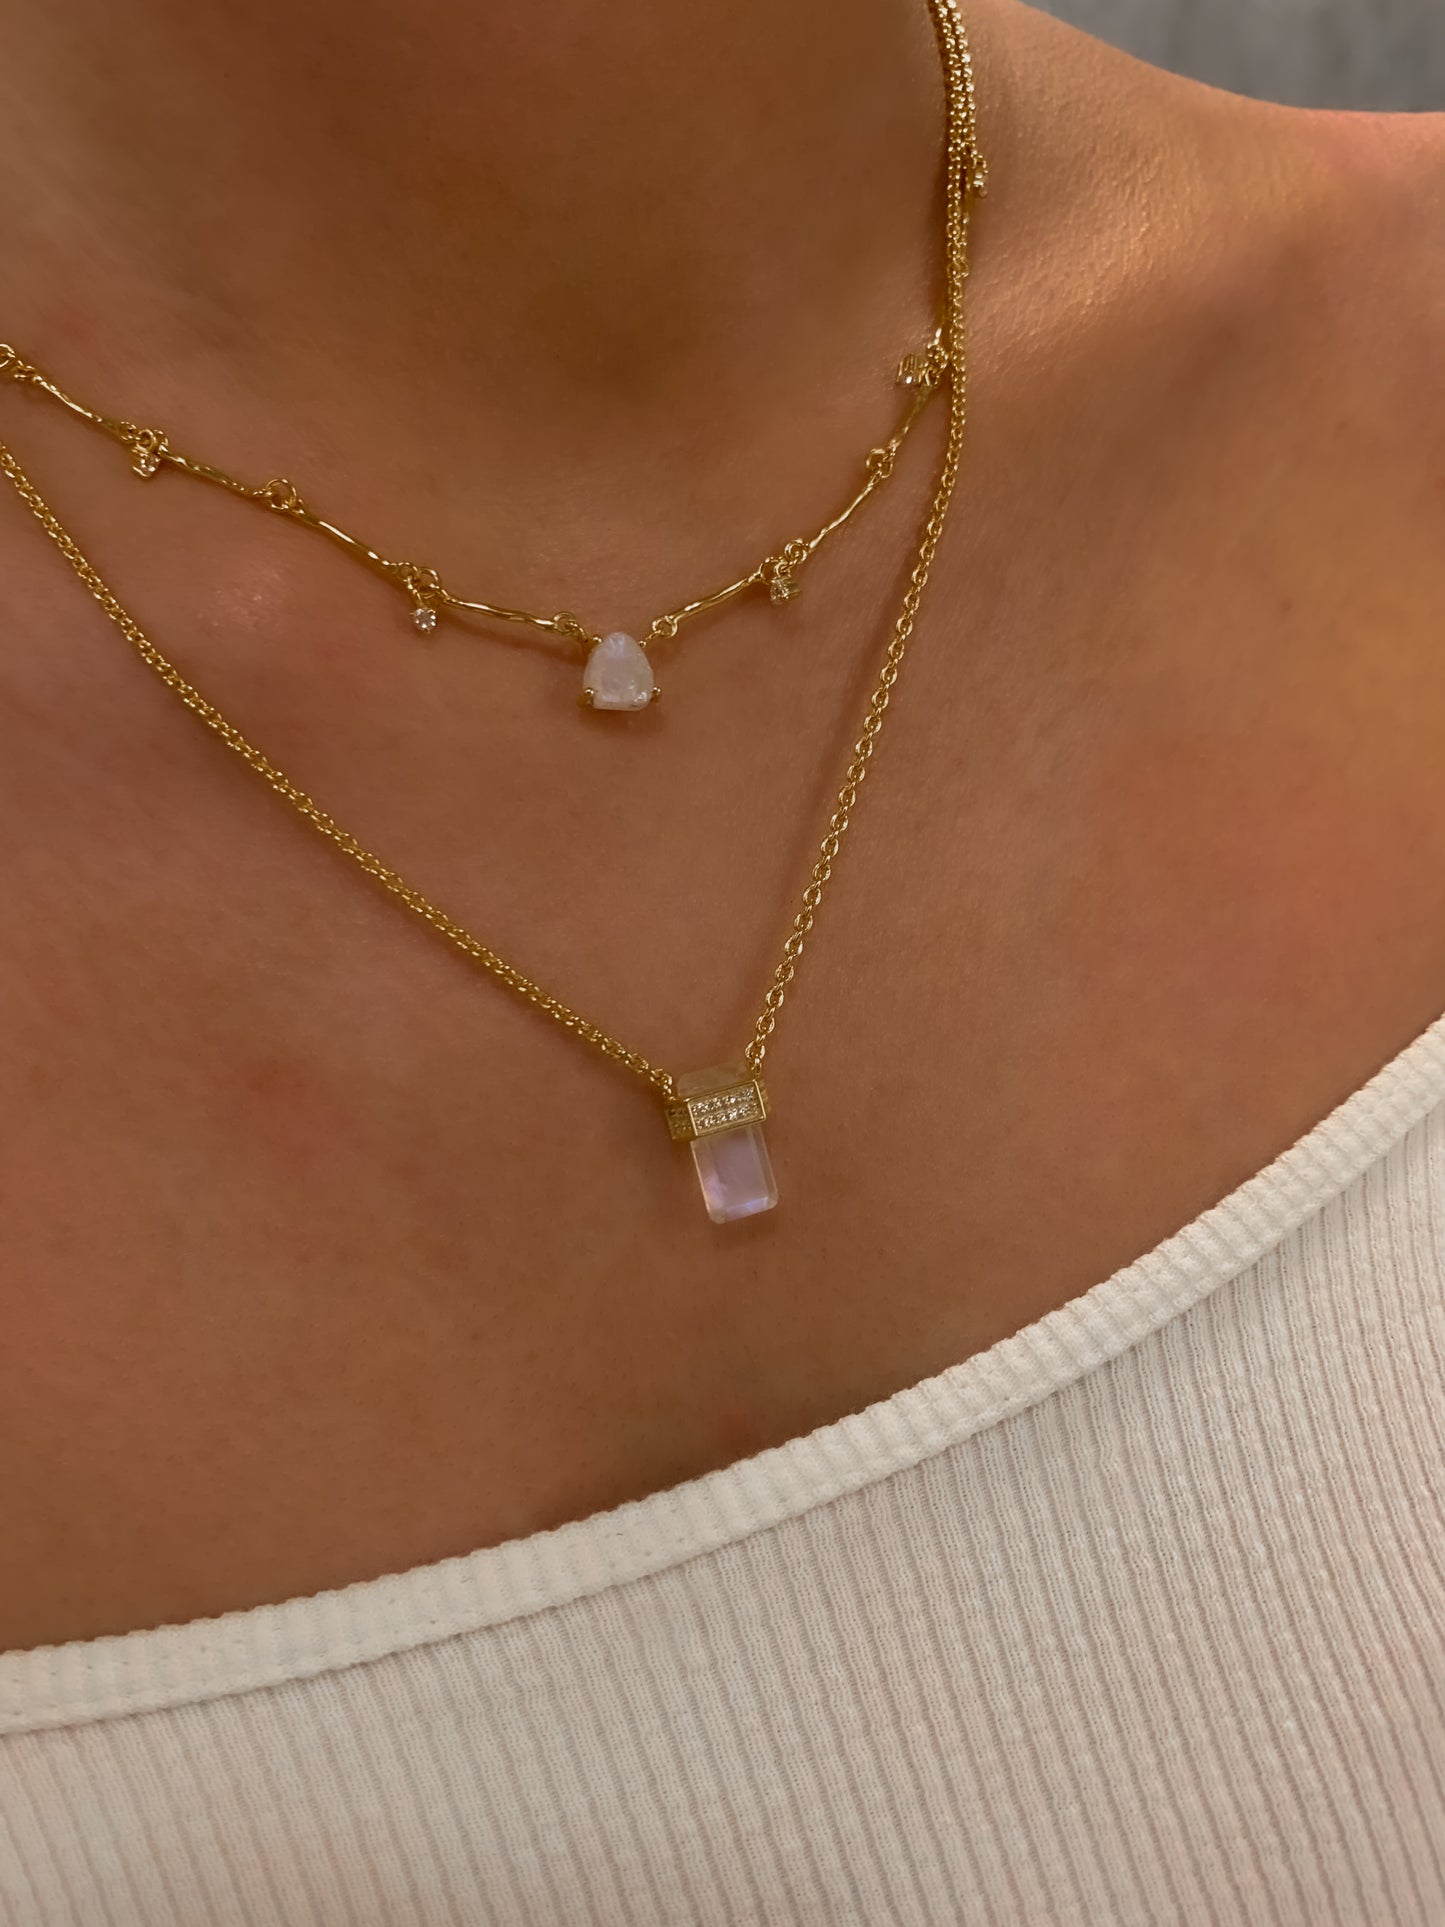 Elysian moonstone necklace